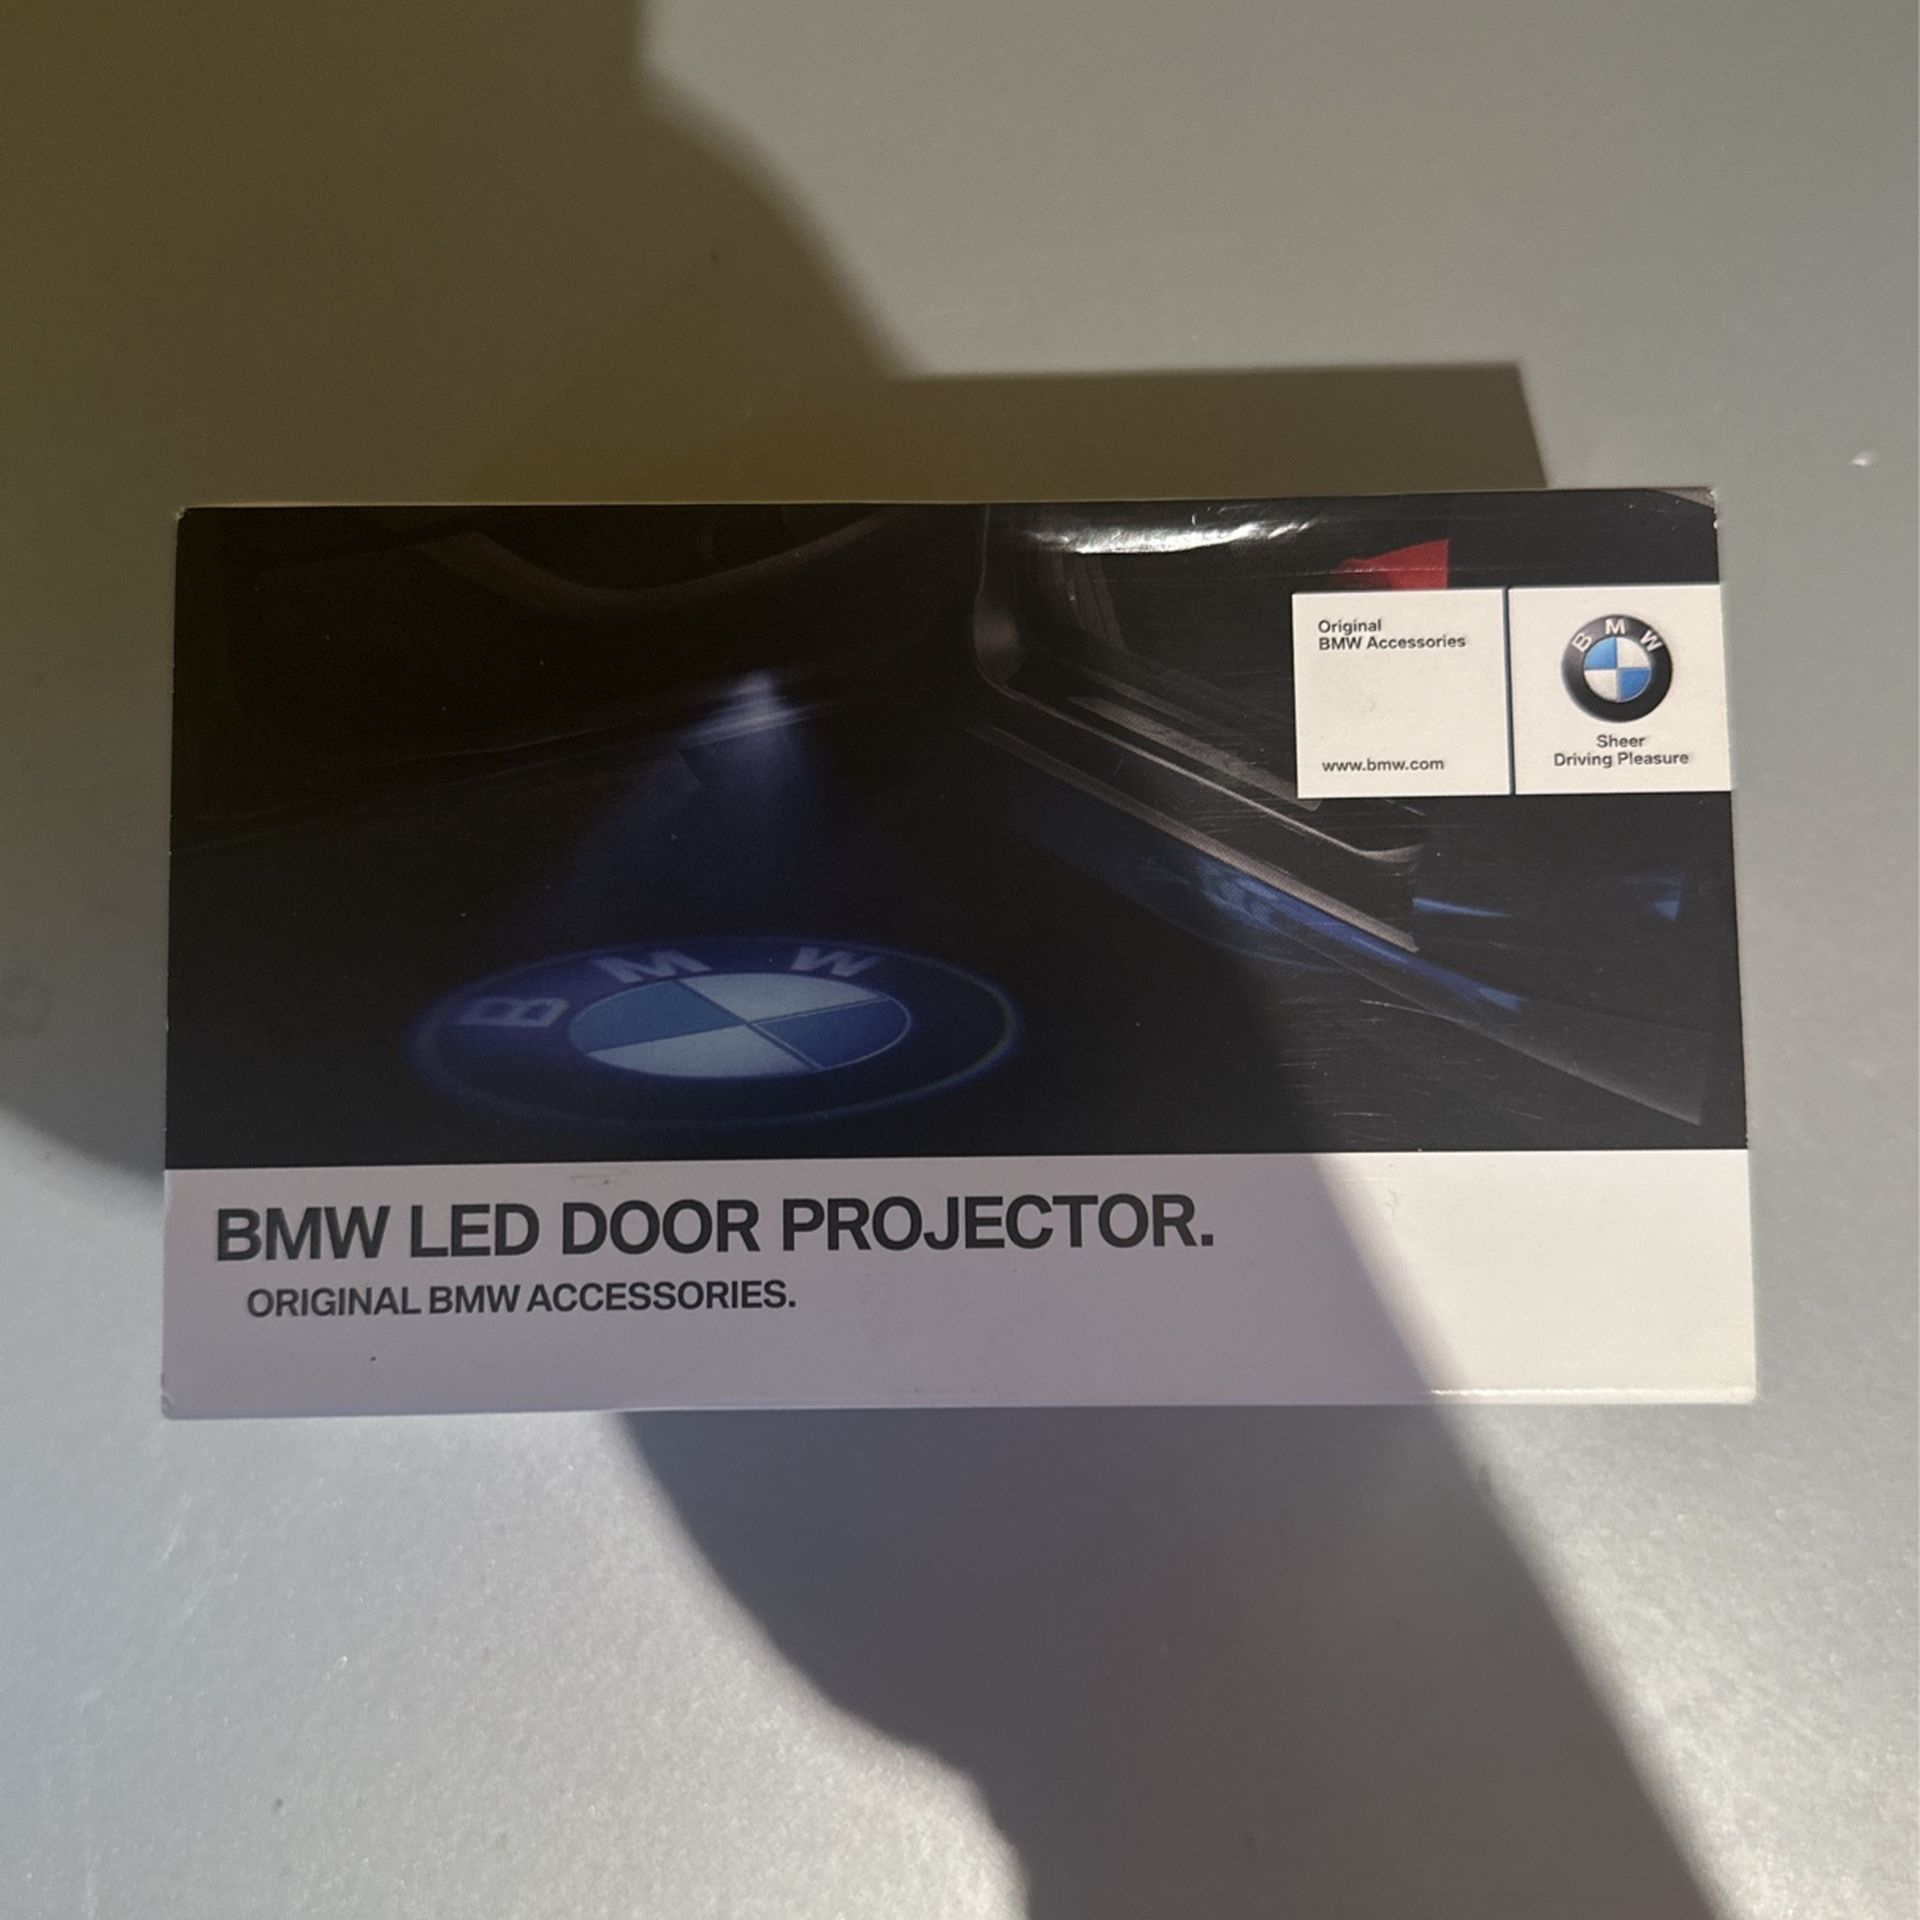 Bmw OEM led Projectors 4 Different Images Authentic Official BMW Puddle 